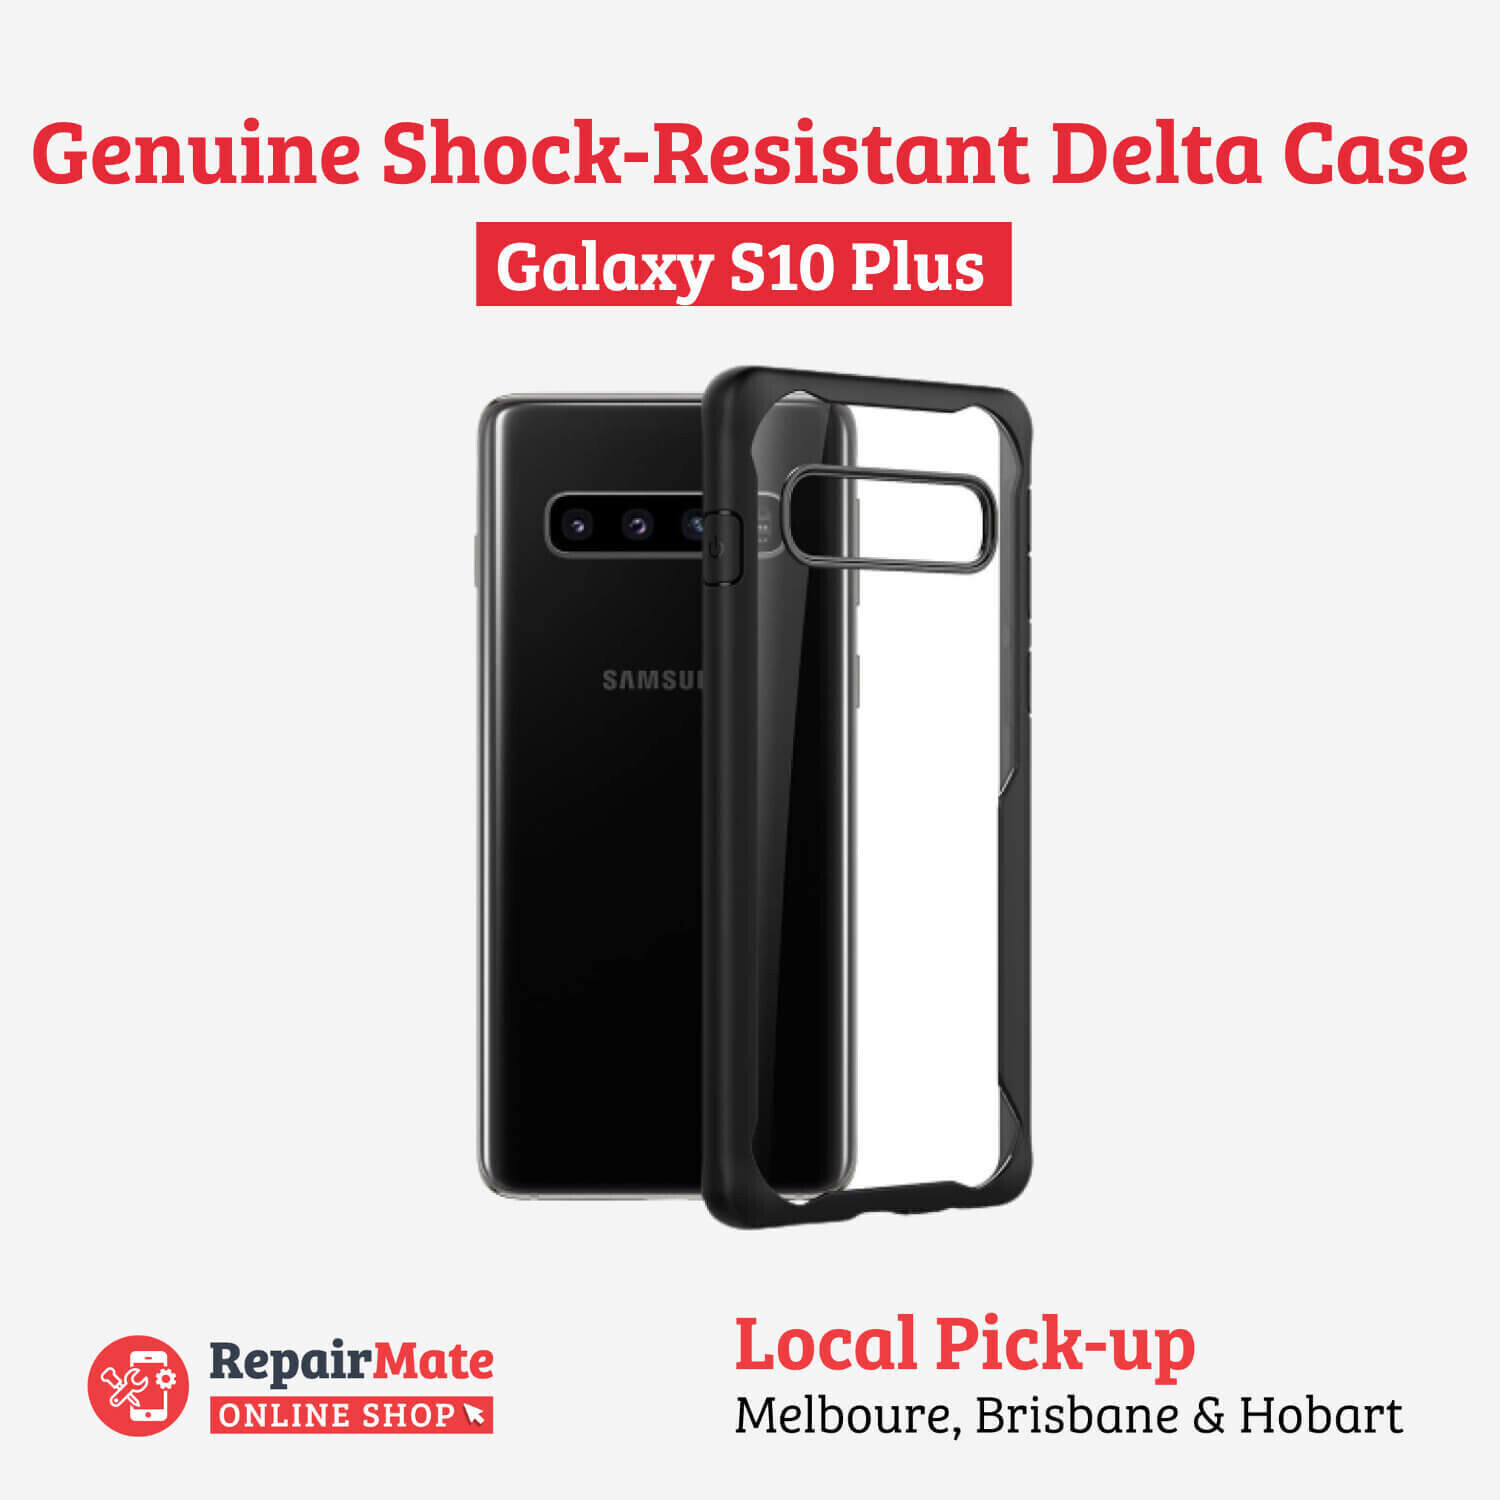 Samsung Galaxy S10 Plus Genuine Shock-Resistant Delta Case